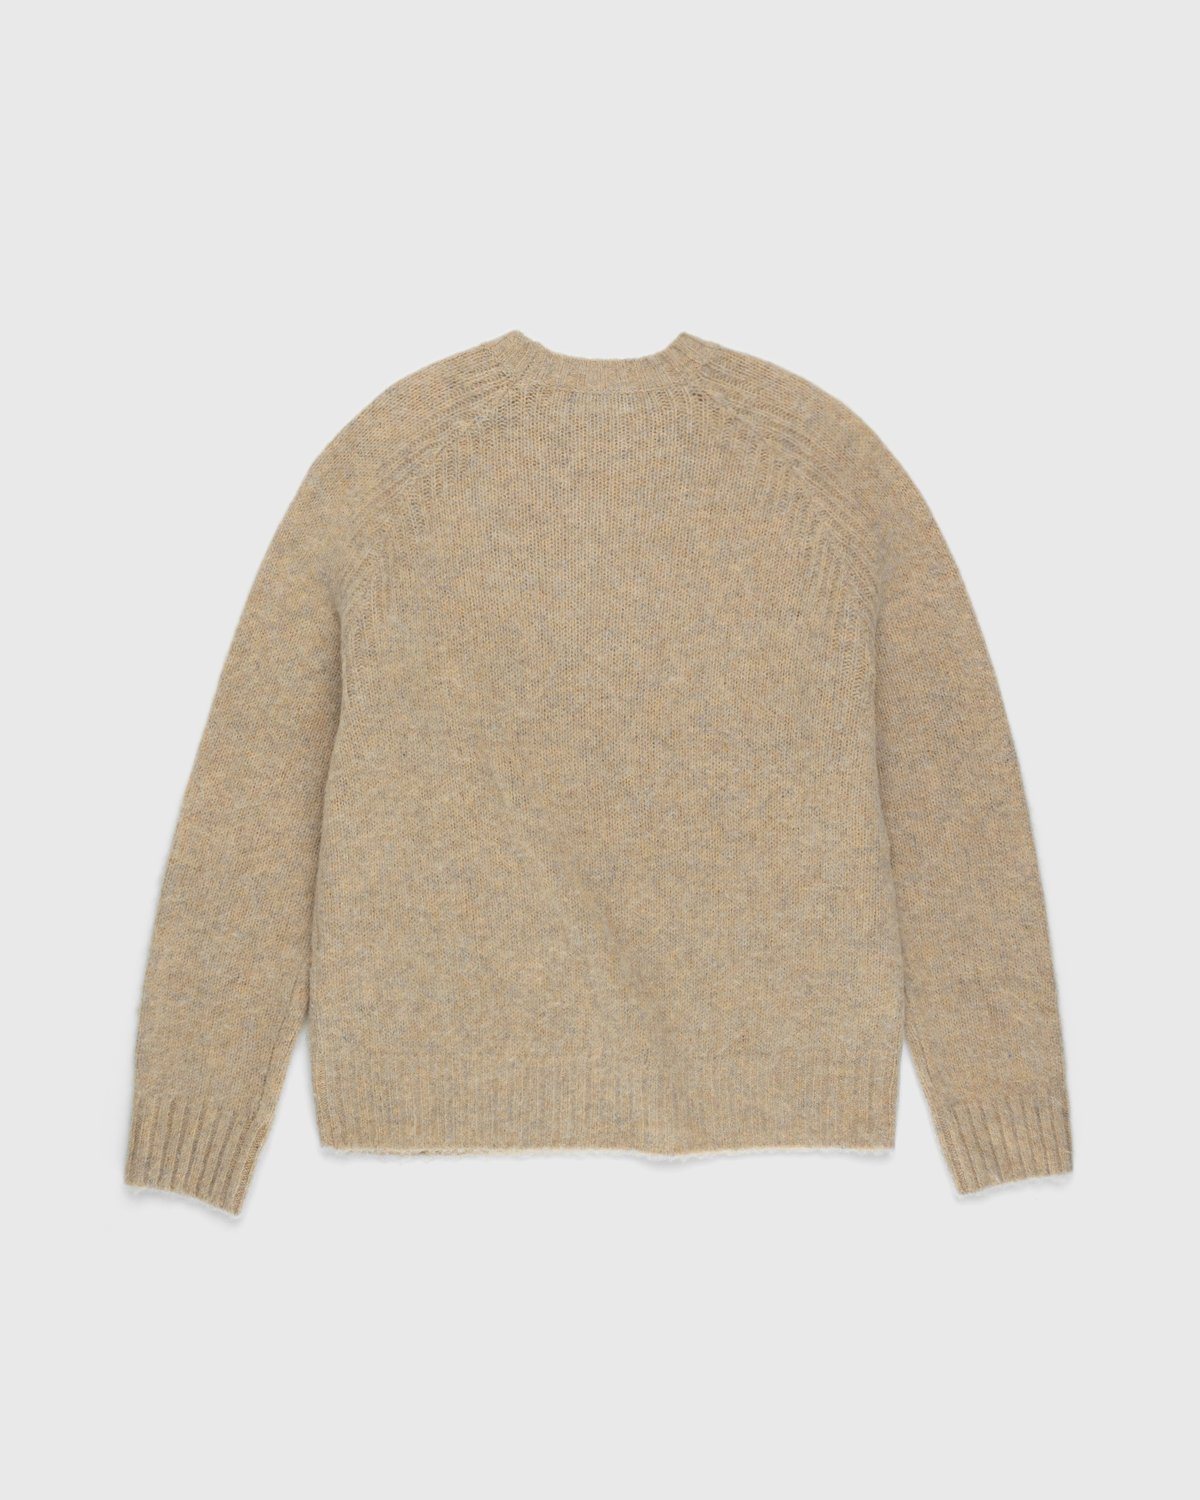 Acne Studios - Brushed Wool Crewneck Sweater Toffee Brown - Clothing - Brown - Image 2